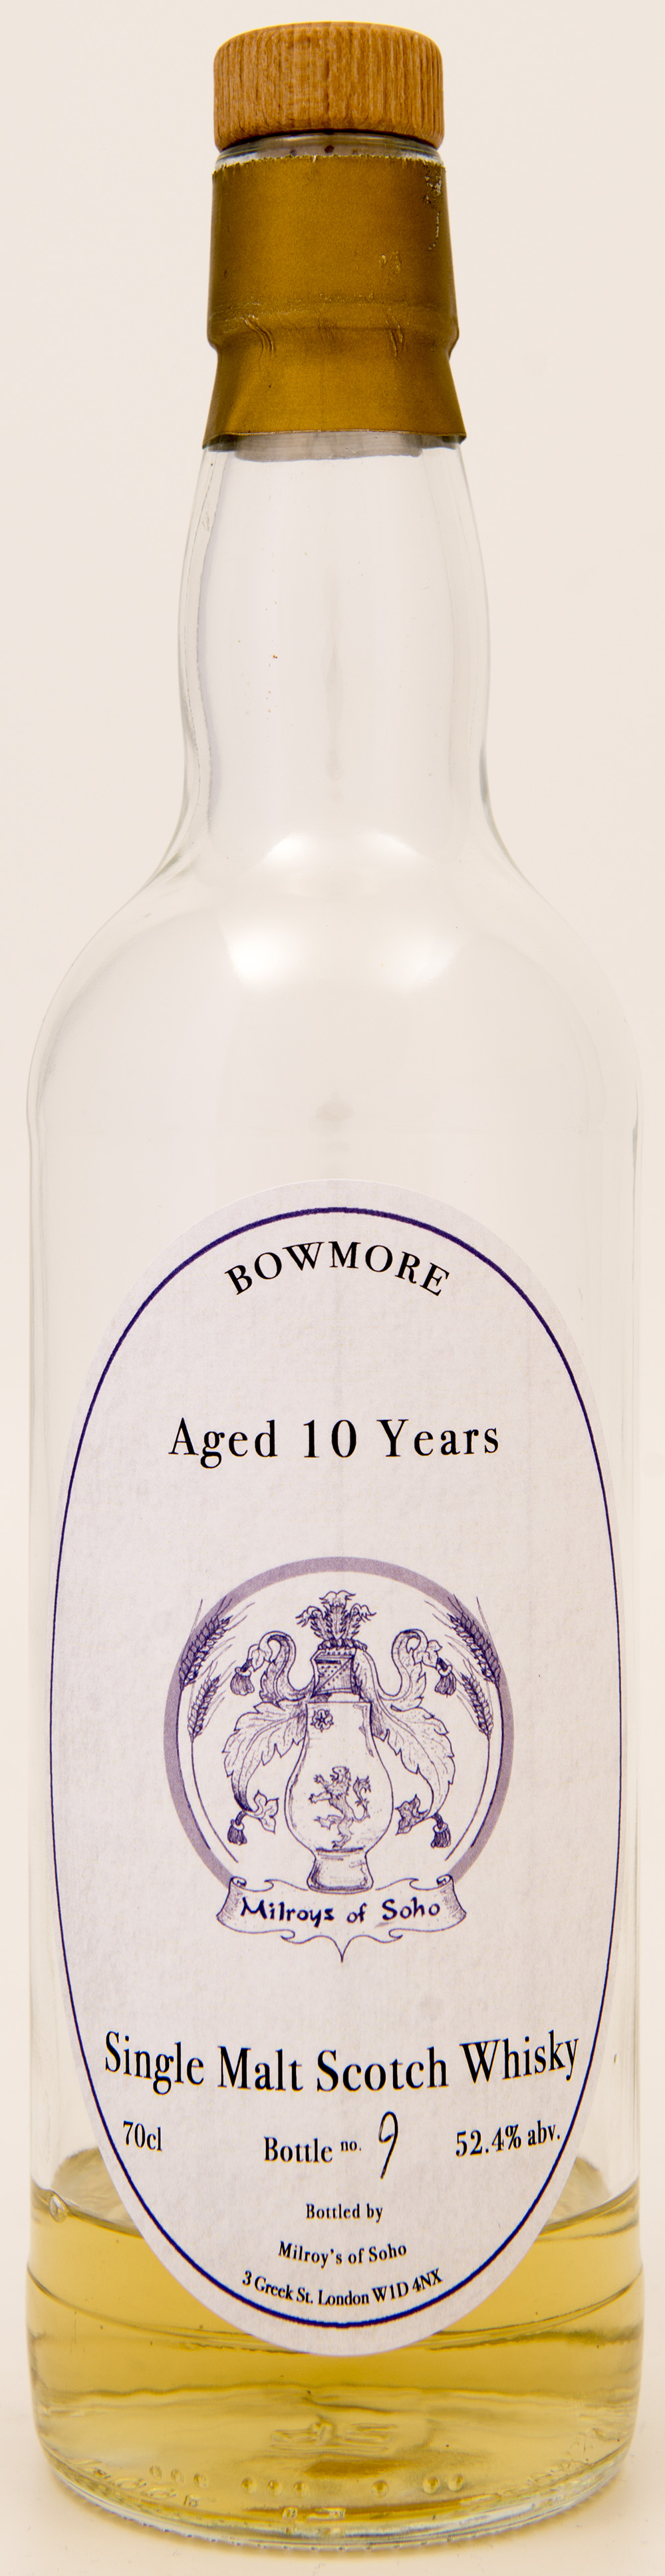 Billede: DSC_1416 - Milroys of Soho - Bowmore - bottle front.jpg